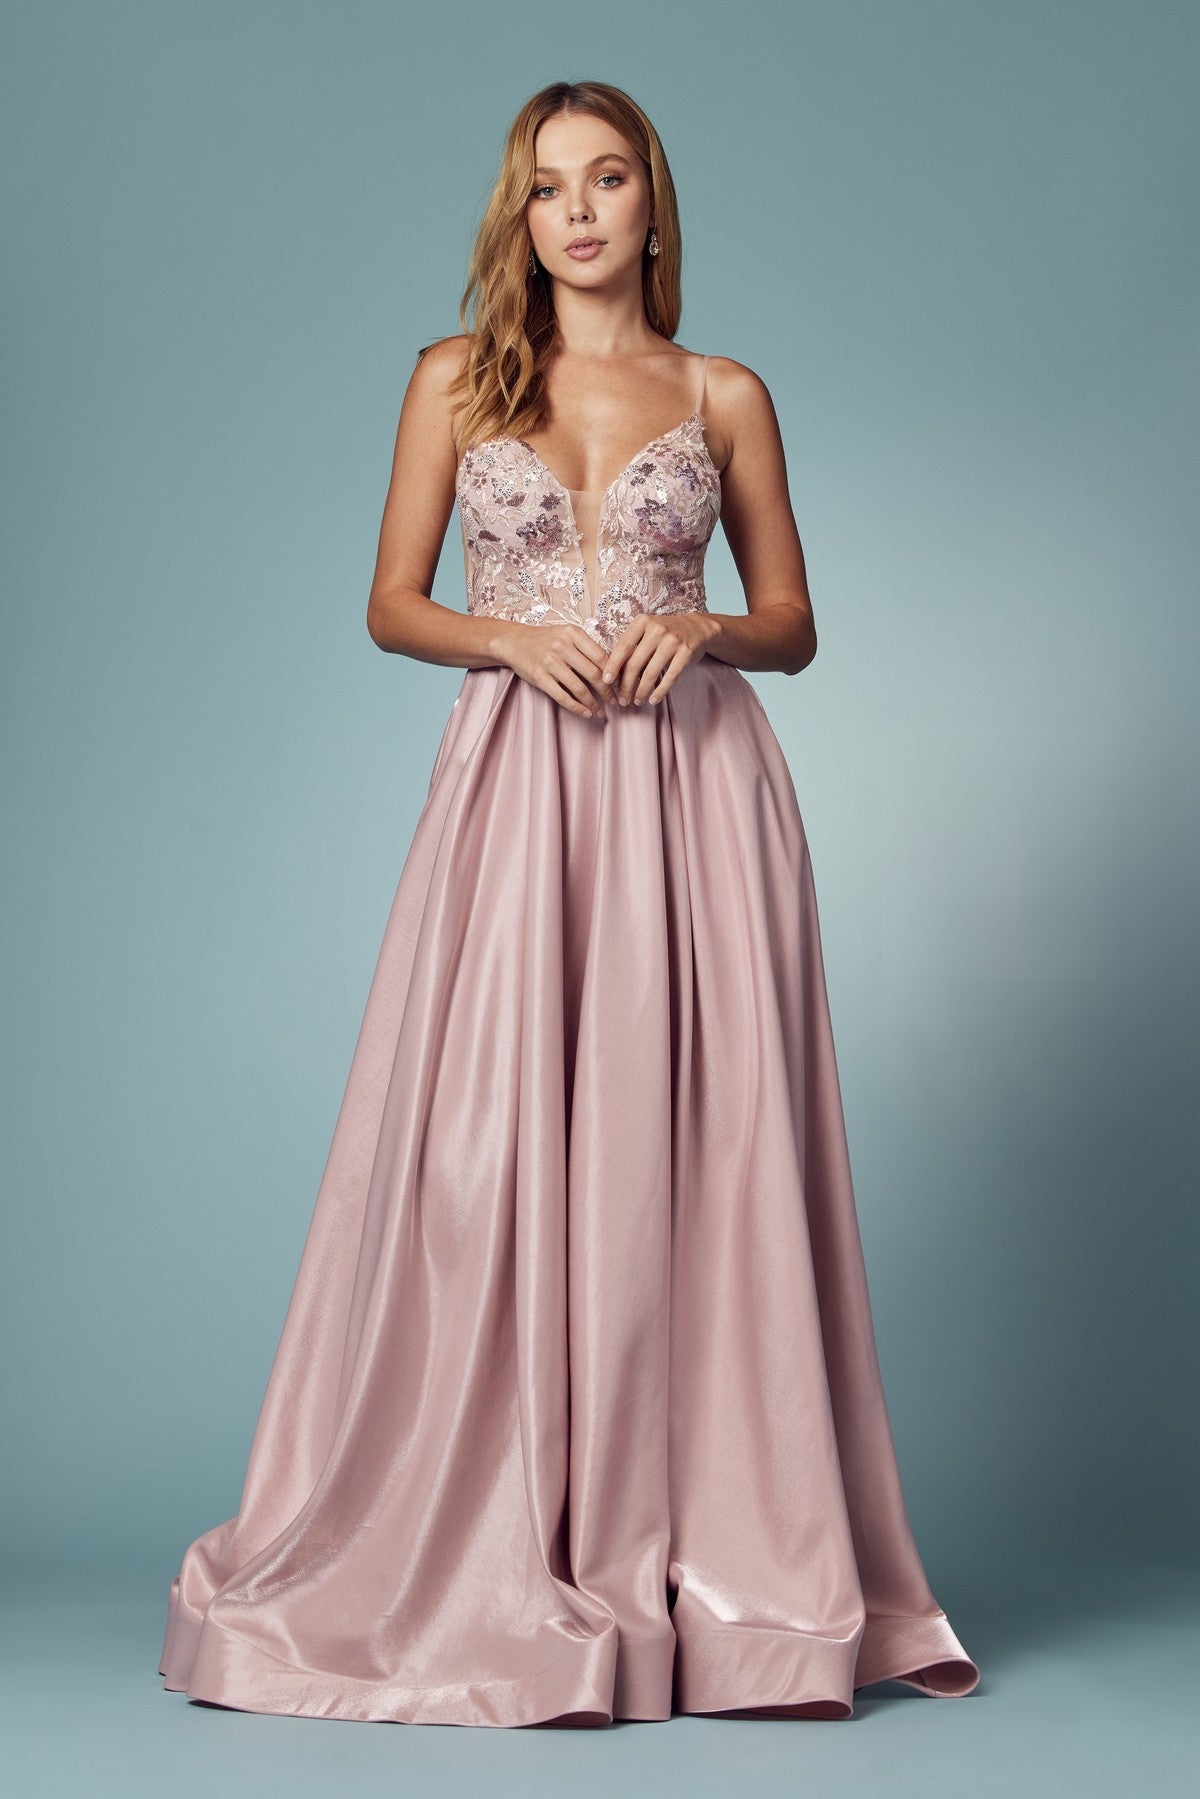 Glitter Embroidered Bodice A-Line Long Prom Dress NXE1004-Prom Dress-smcfashion.com